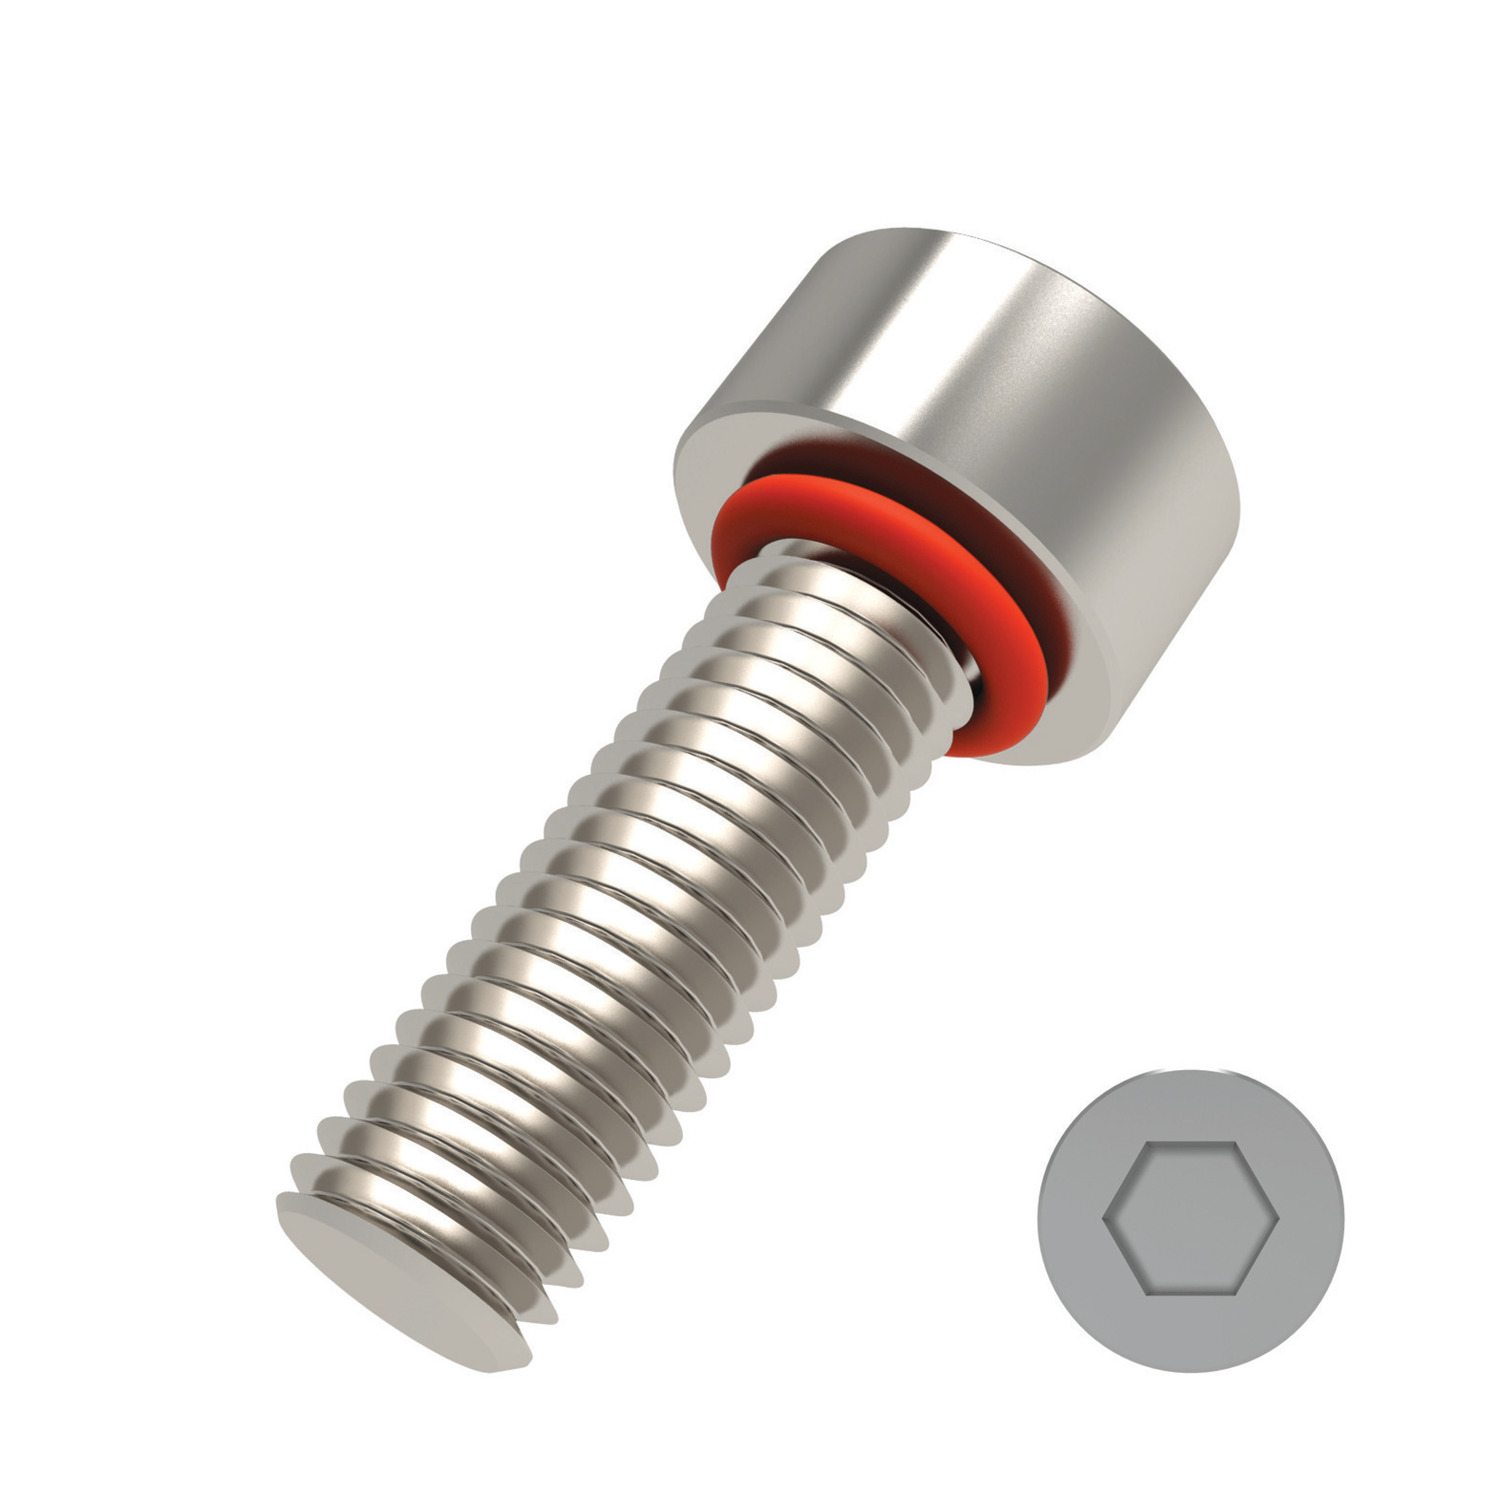 P0173.020-004-VI Seal screw socket cap head M2x4 A2 s/s Viton O Ring